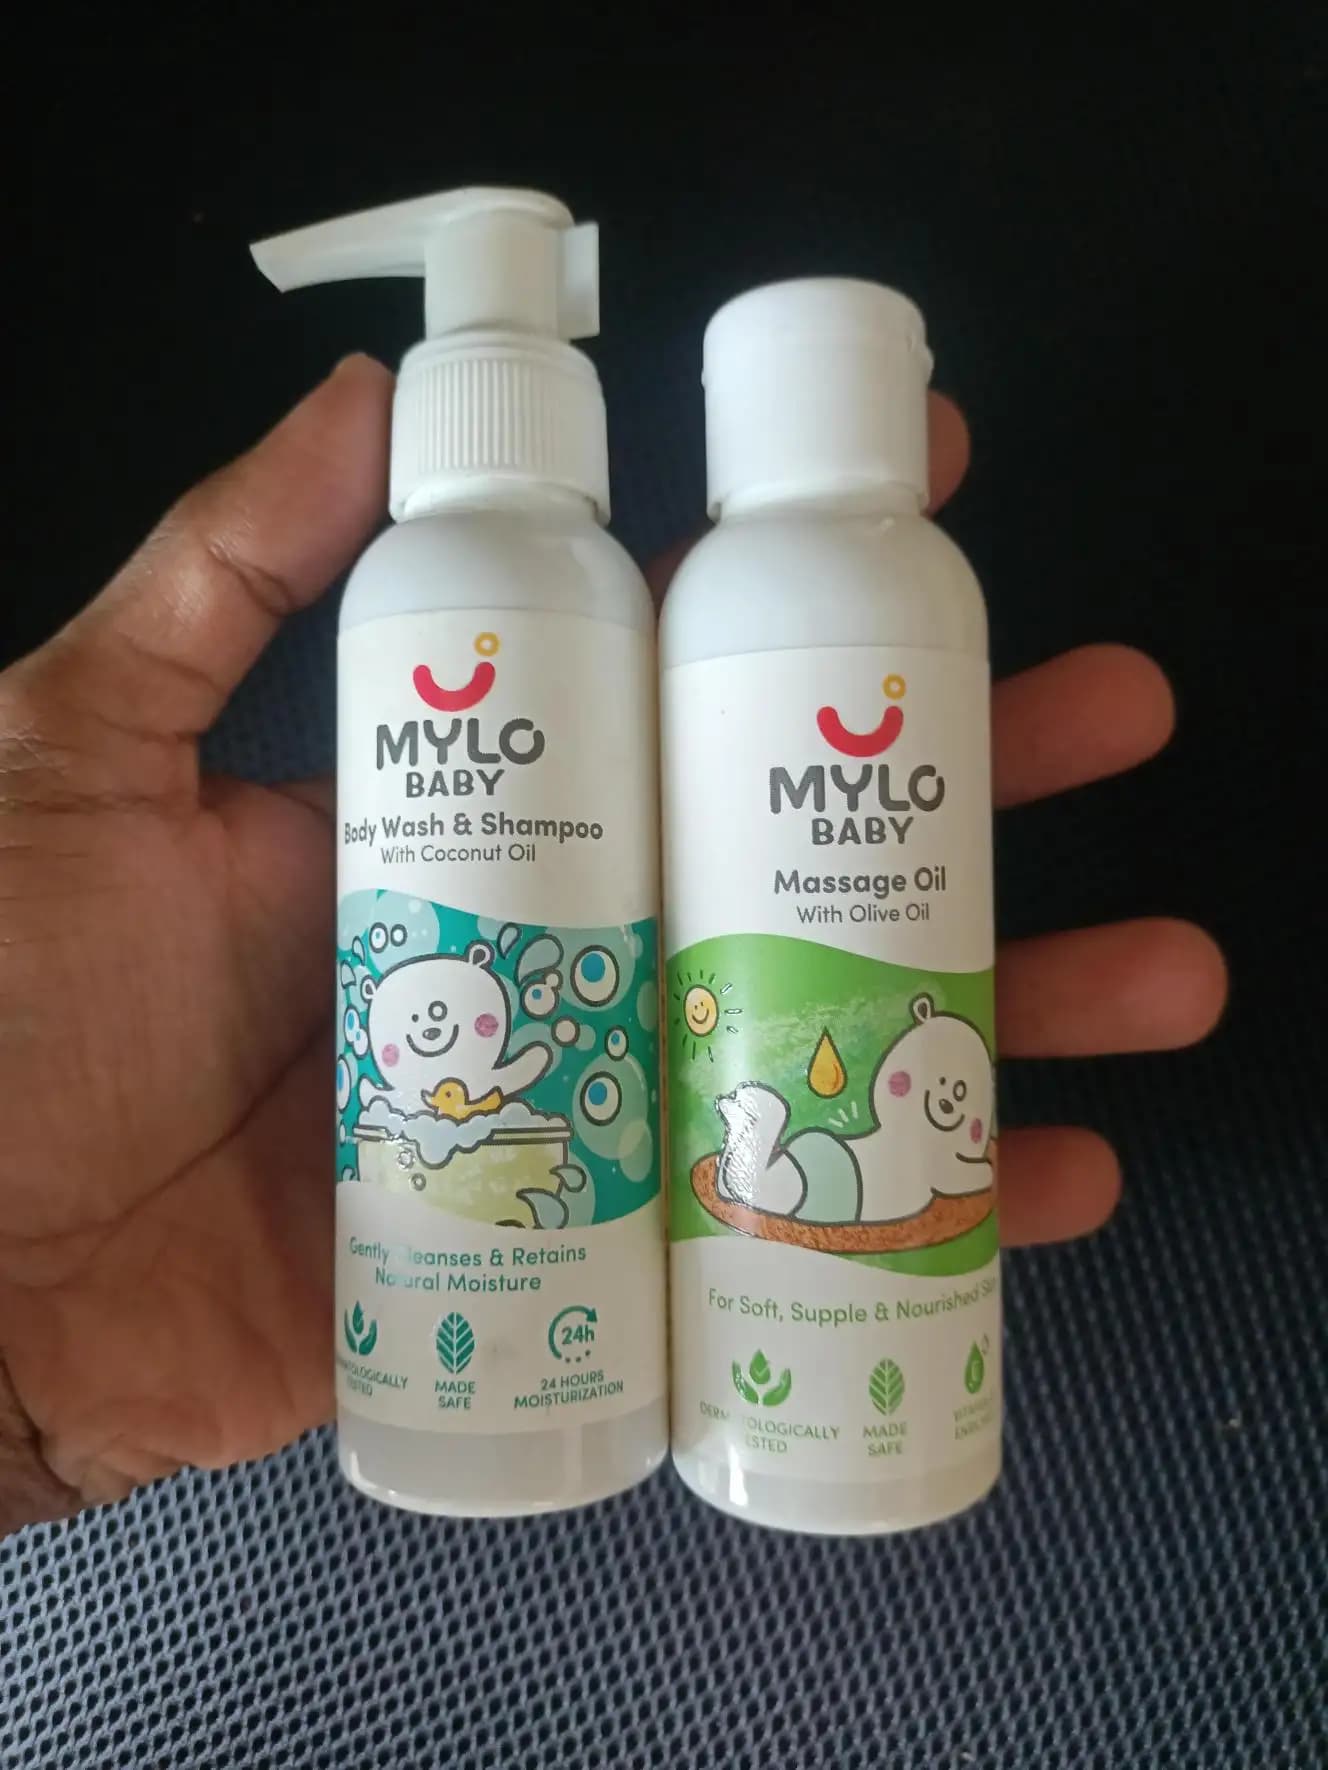 Mylo Baby Bath Regime Kit - Baby Massage Oil, Baby Head to Toe Wash & Baby Talc-Free Powder